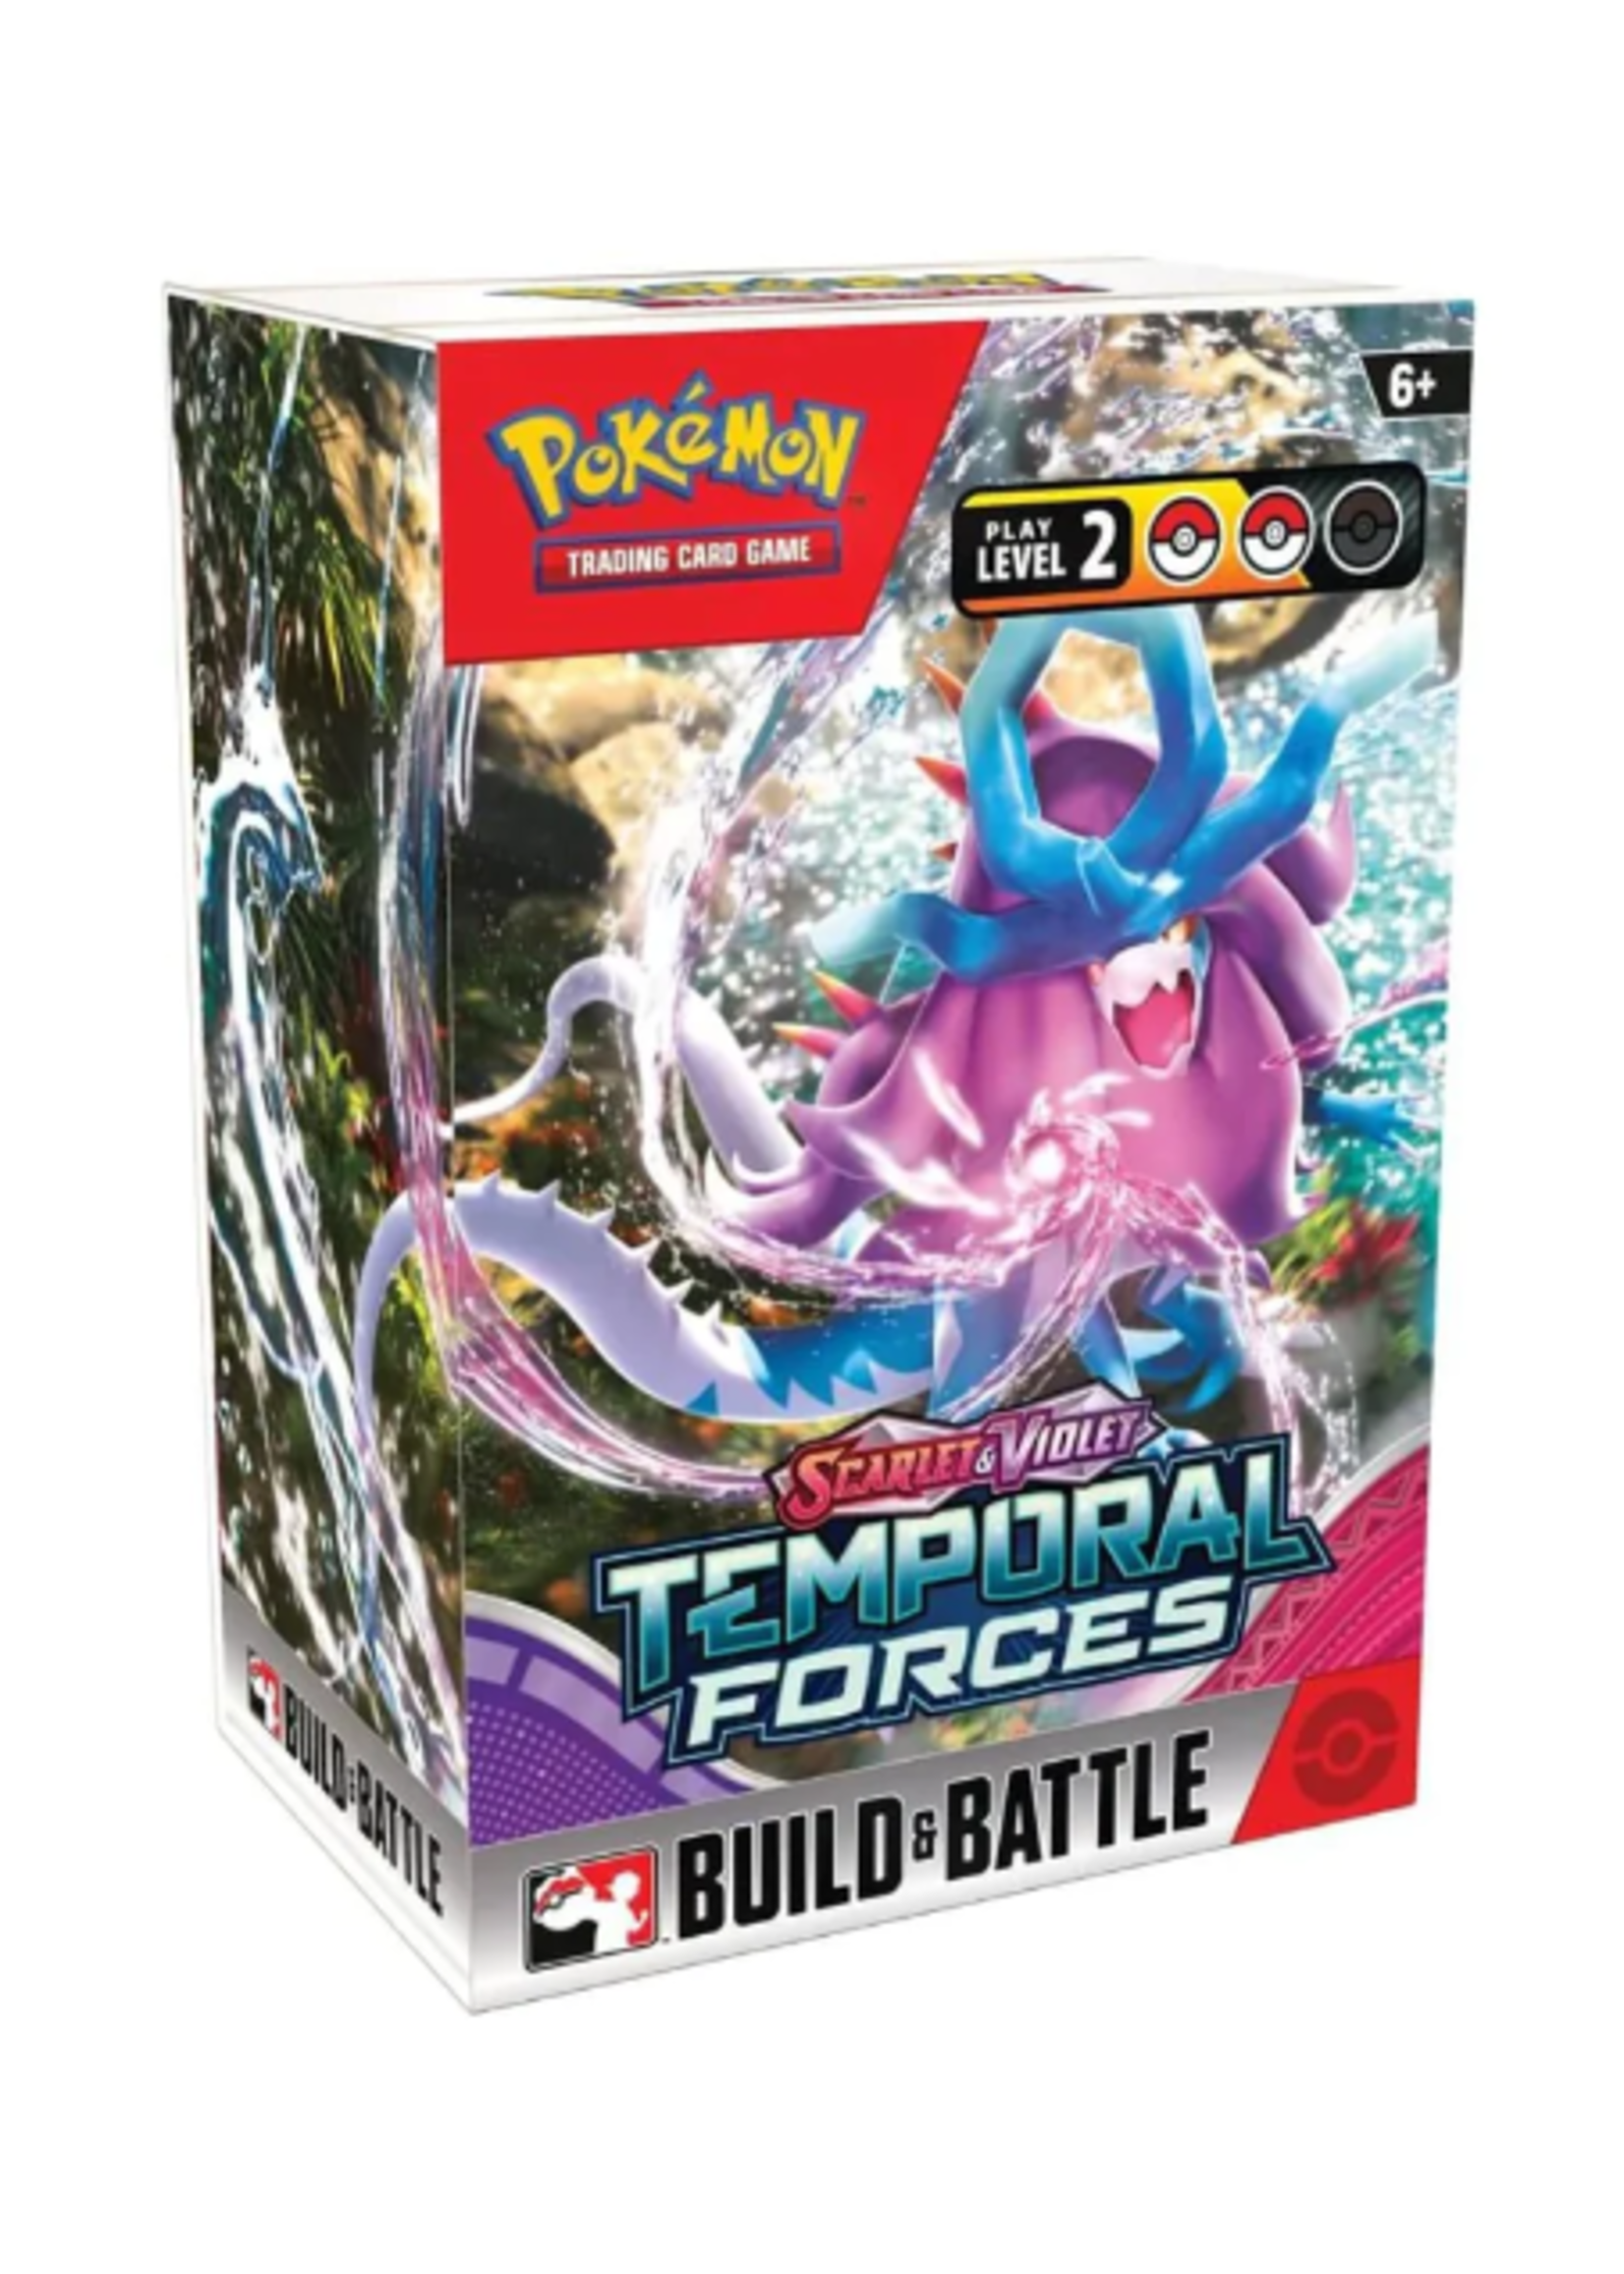 Pokemon Pokemon: S&V5: Temporal Forces: Build & Battle Box